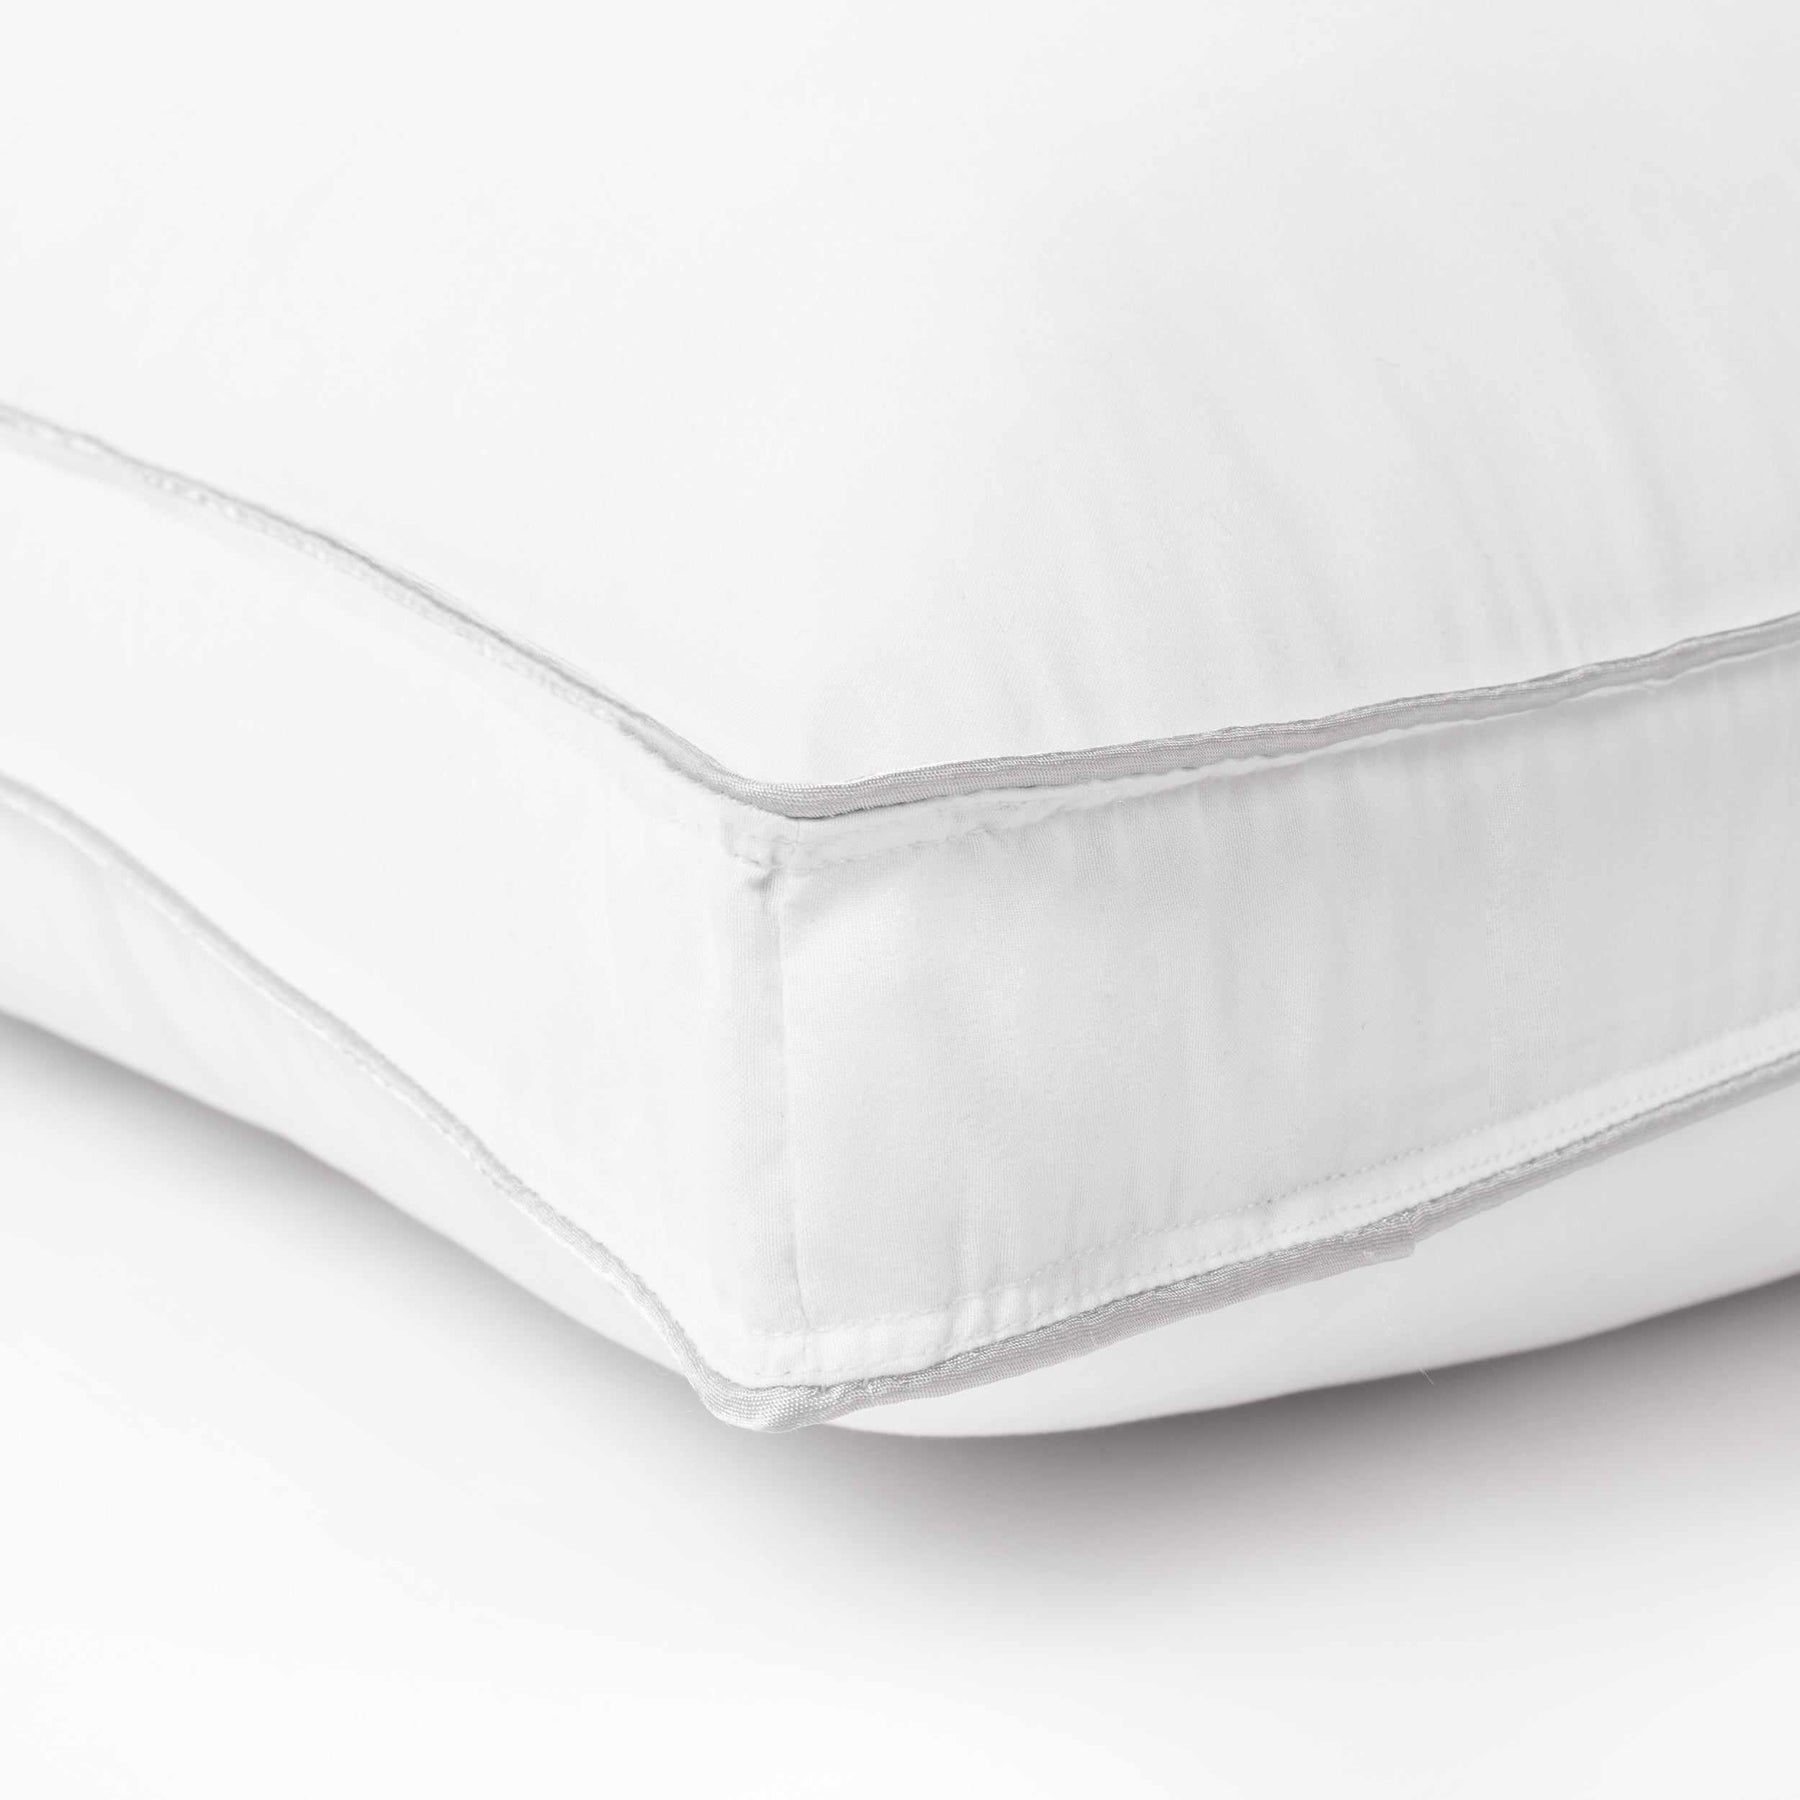  Hypoallergenic Microfiber Set of 2 Gusset Pillows - White